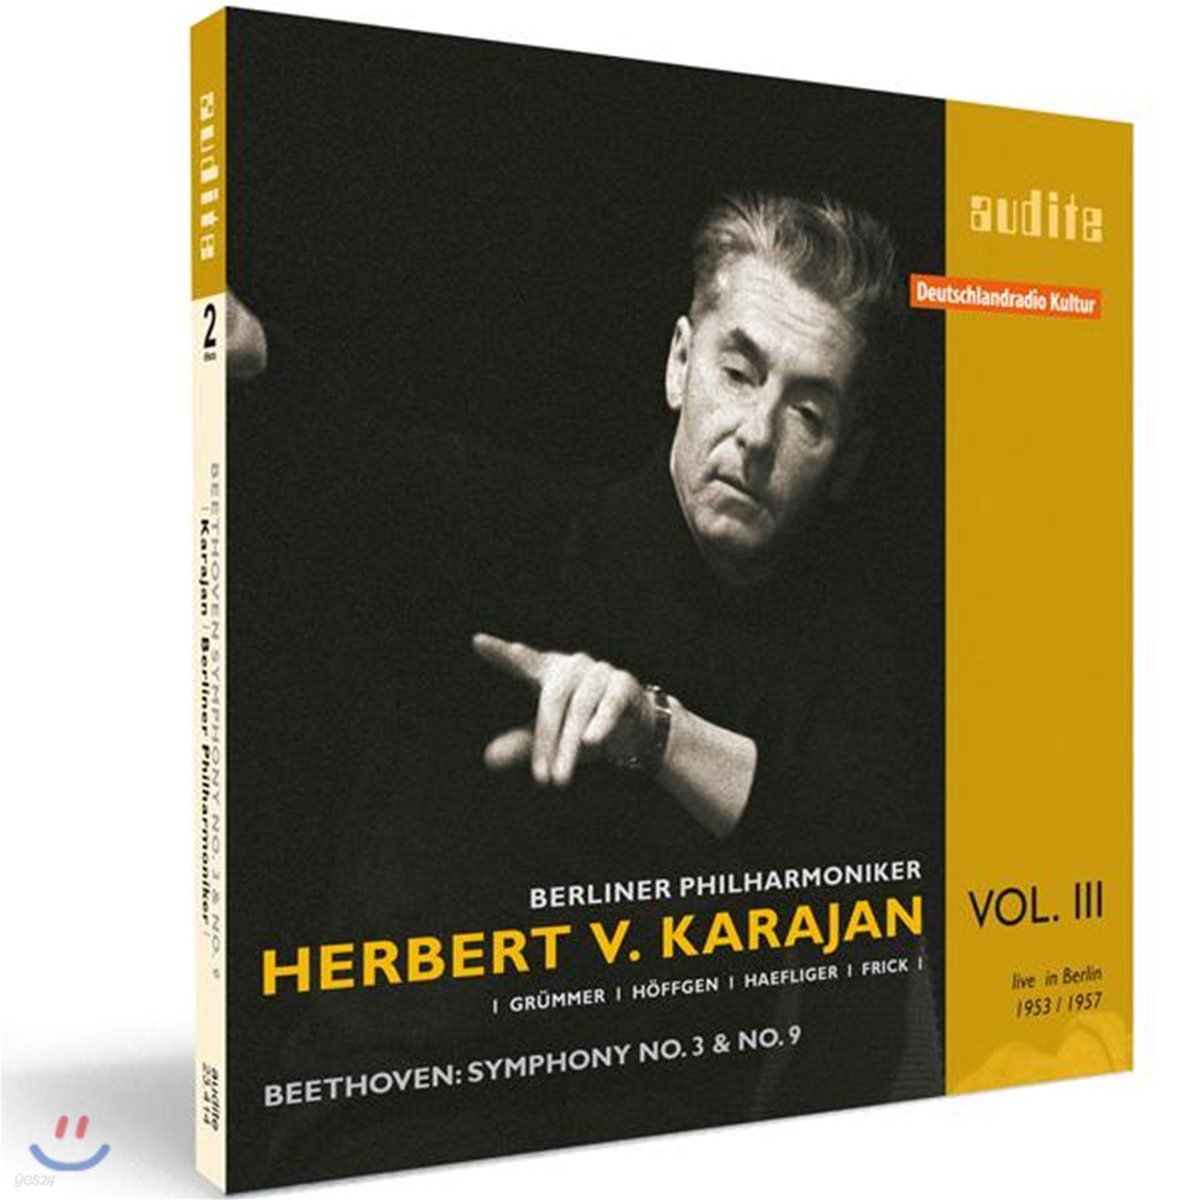 Herbert Von Karajan 베토벤 : 교향곡 3, 9번 (Beethoveny : Symphony no.3, no.9`) 카라얀